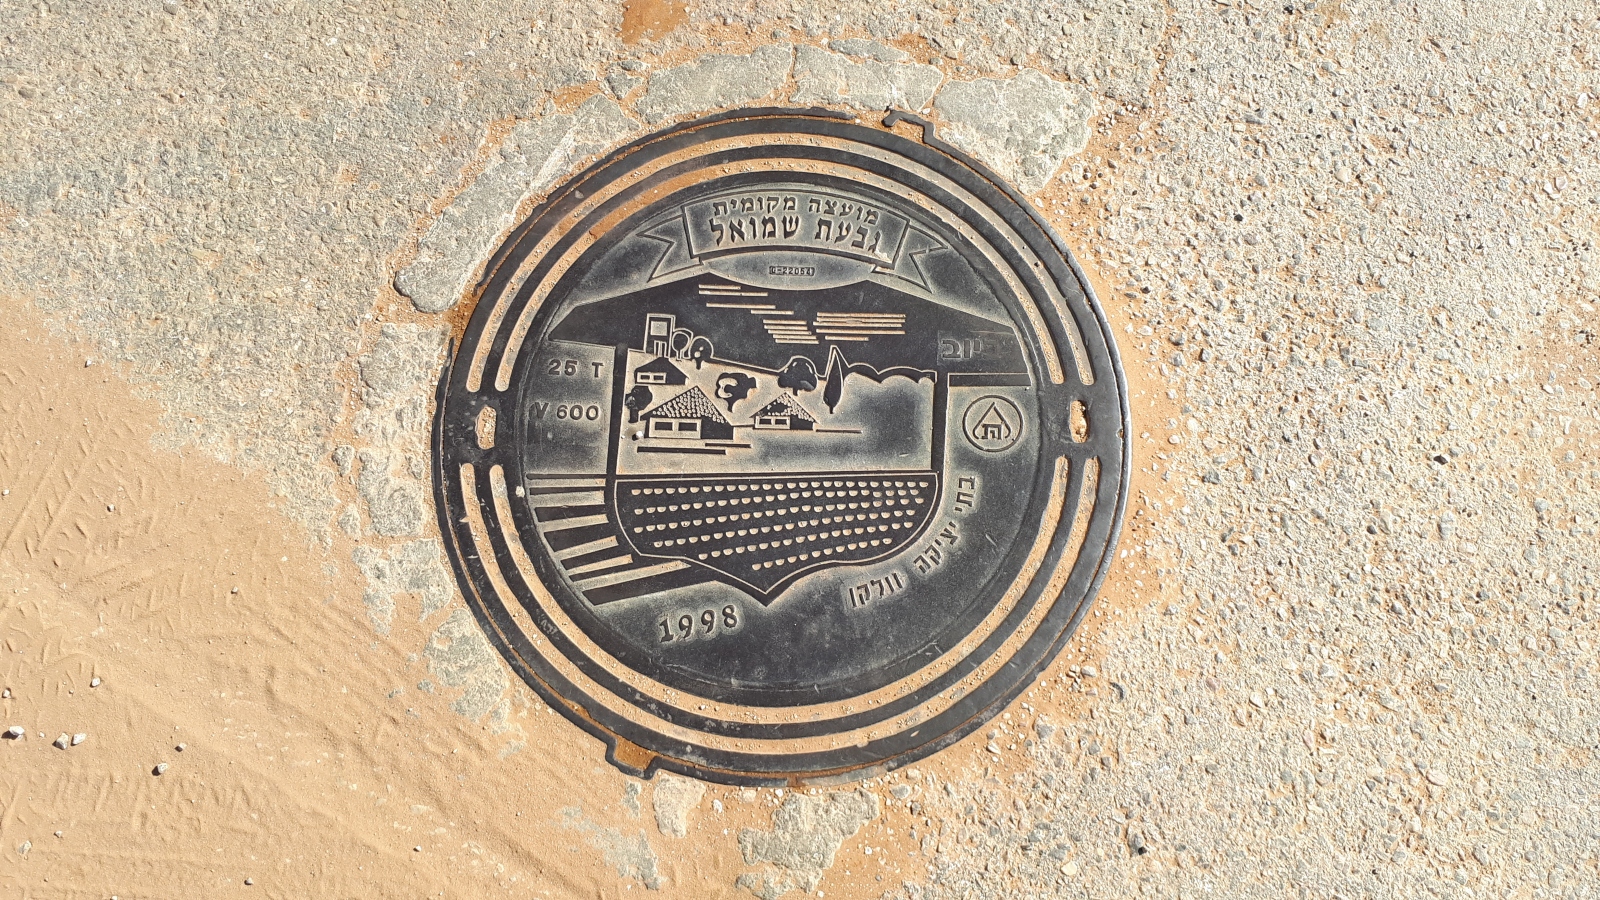 The Tel Aviv man who’s documented 8,072 manhole covers